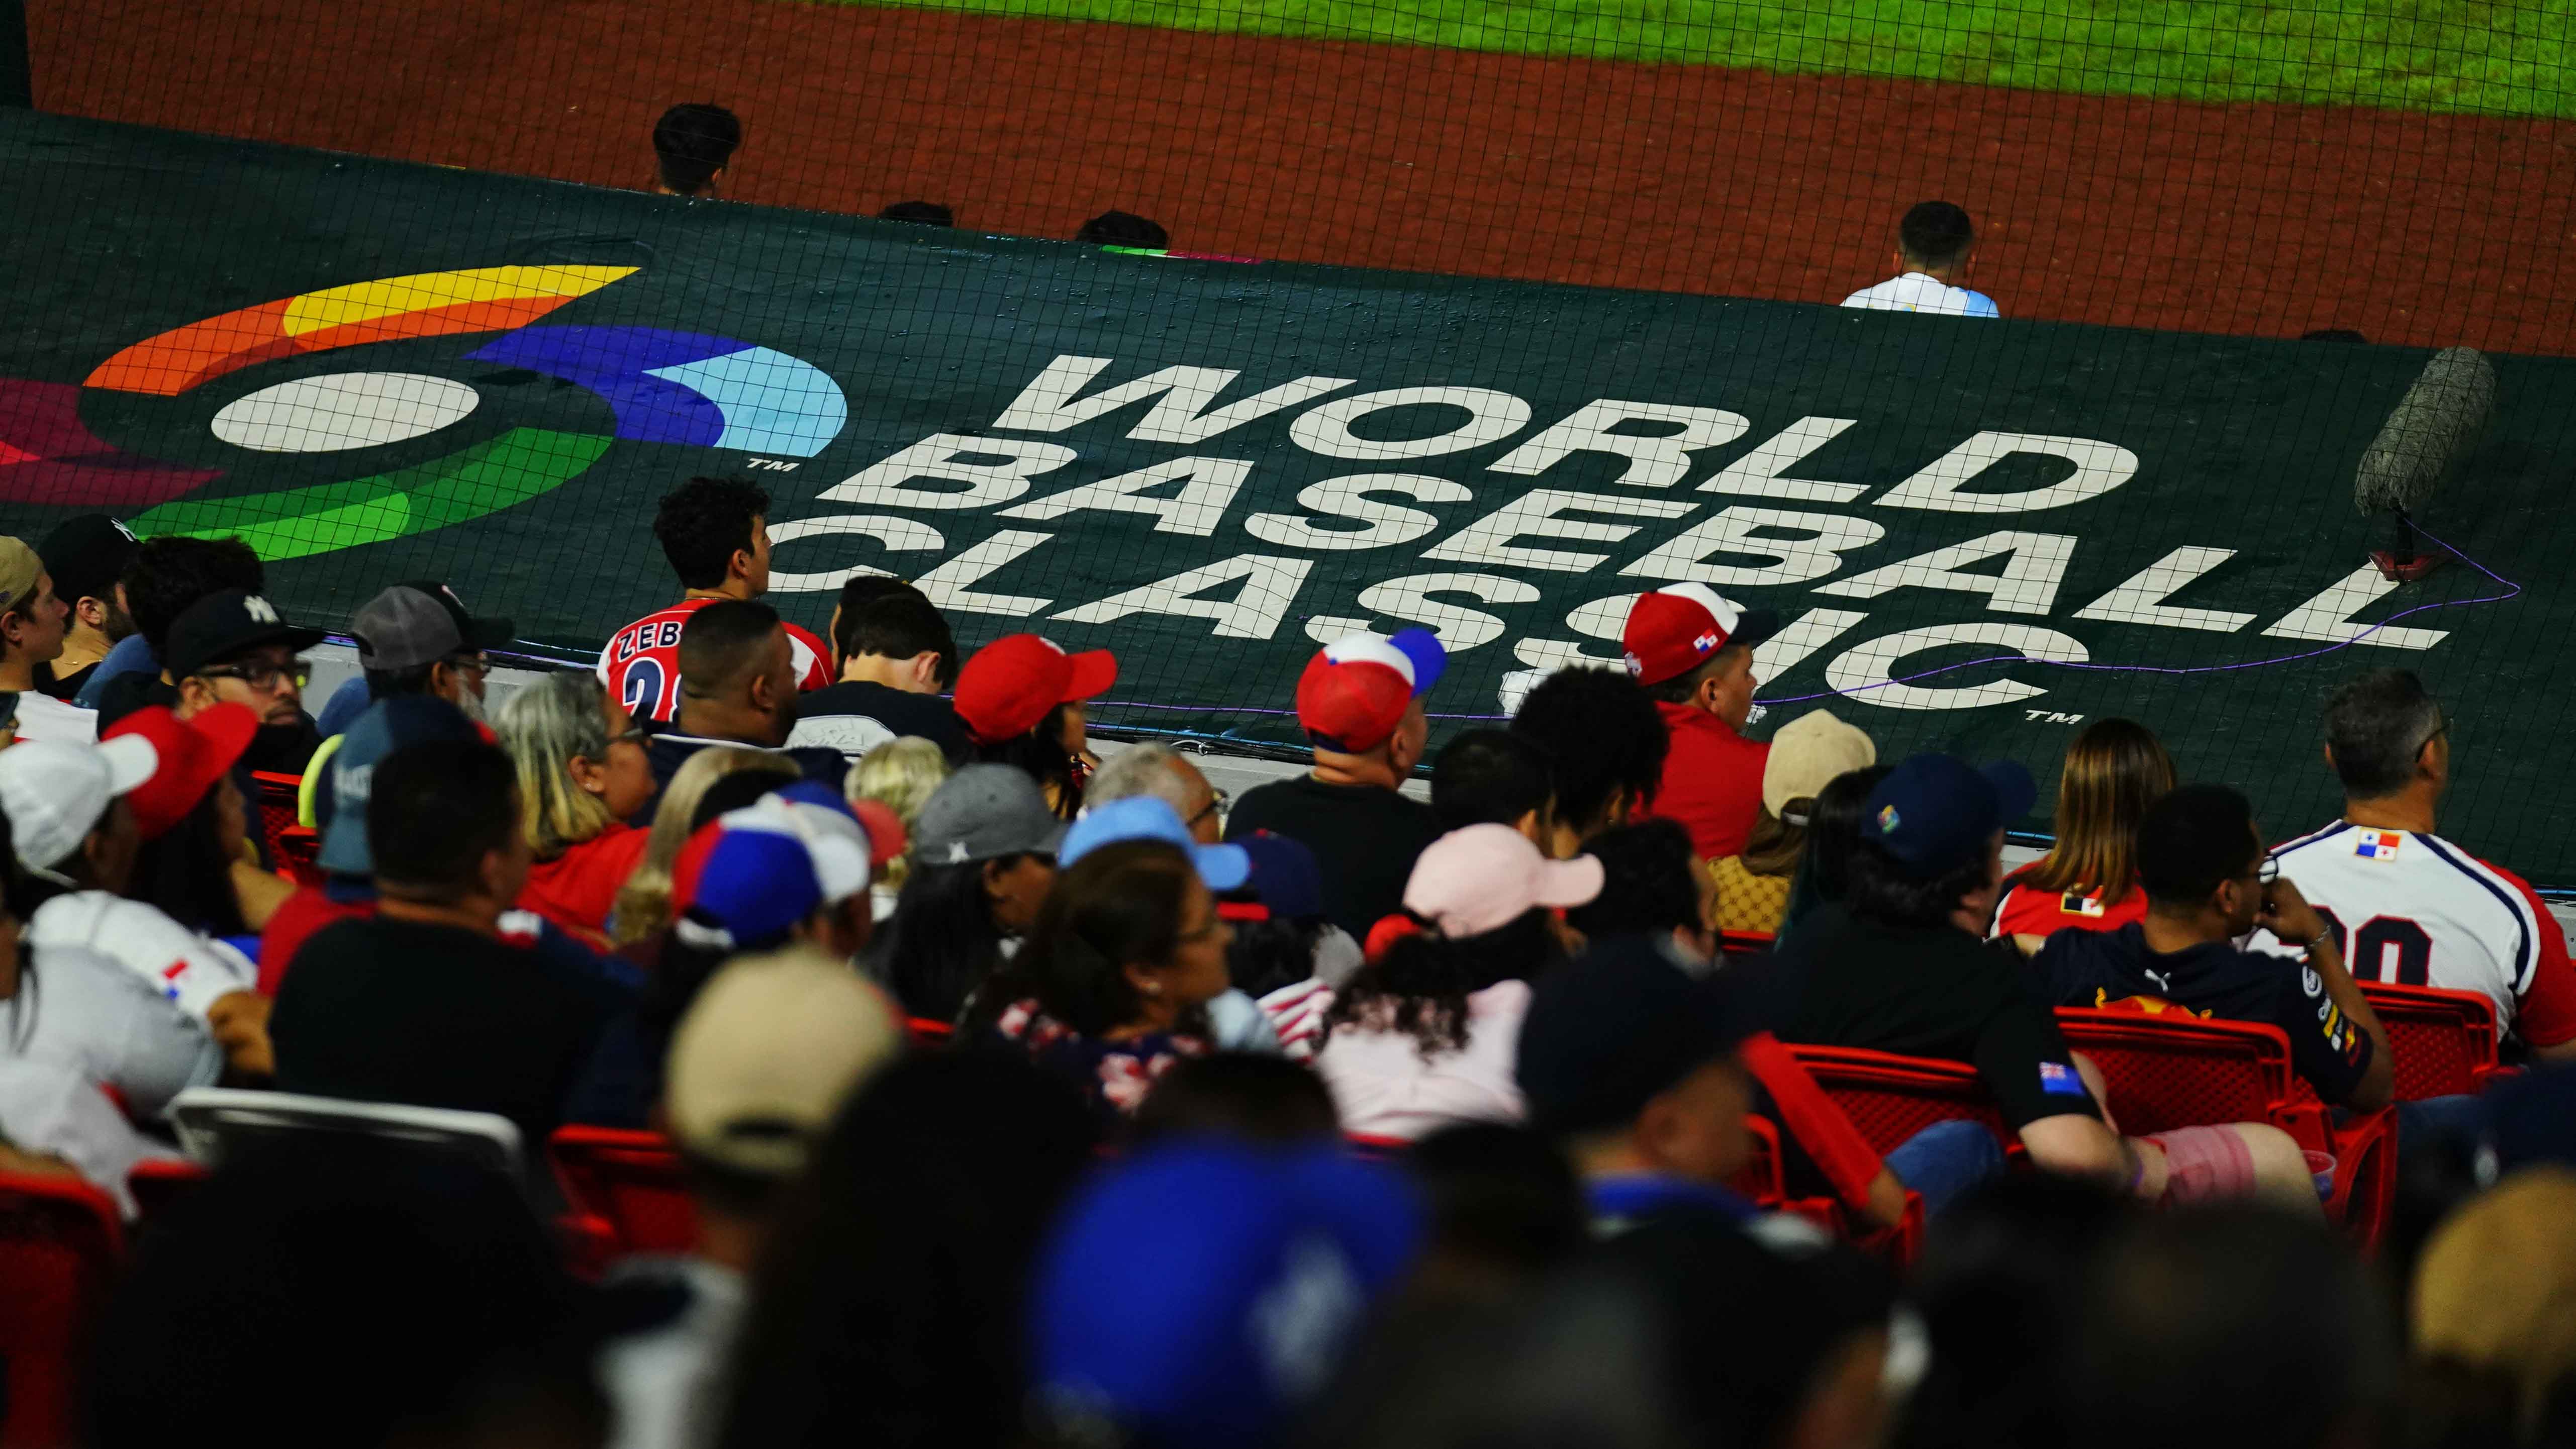 Miami's loanDepot park hosts 2023 World Baseball Classic